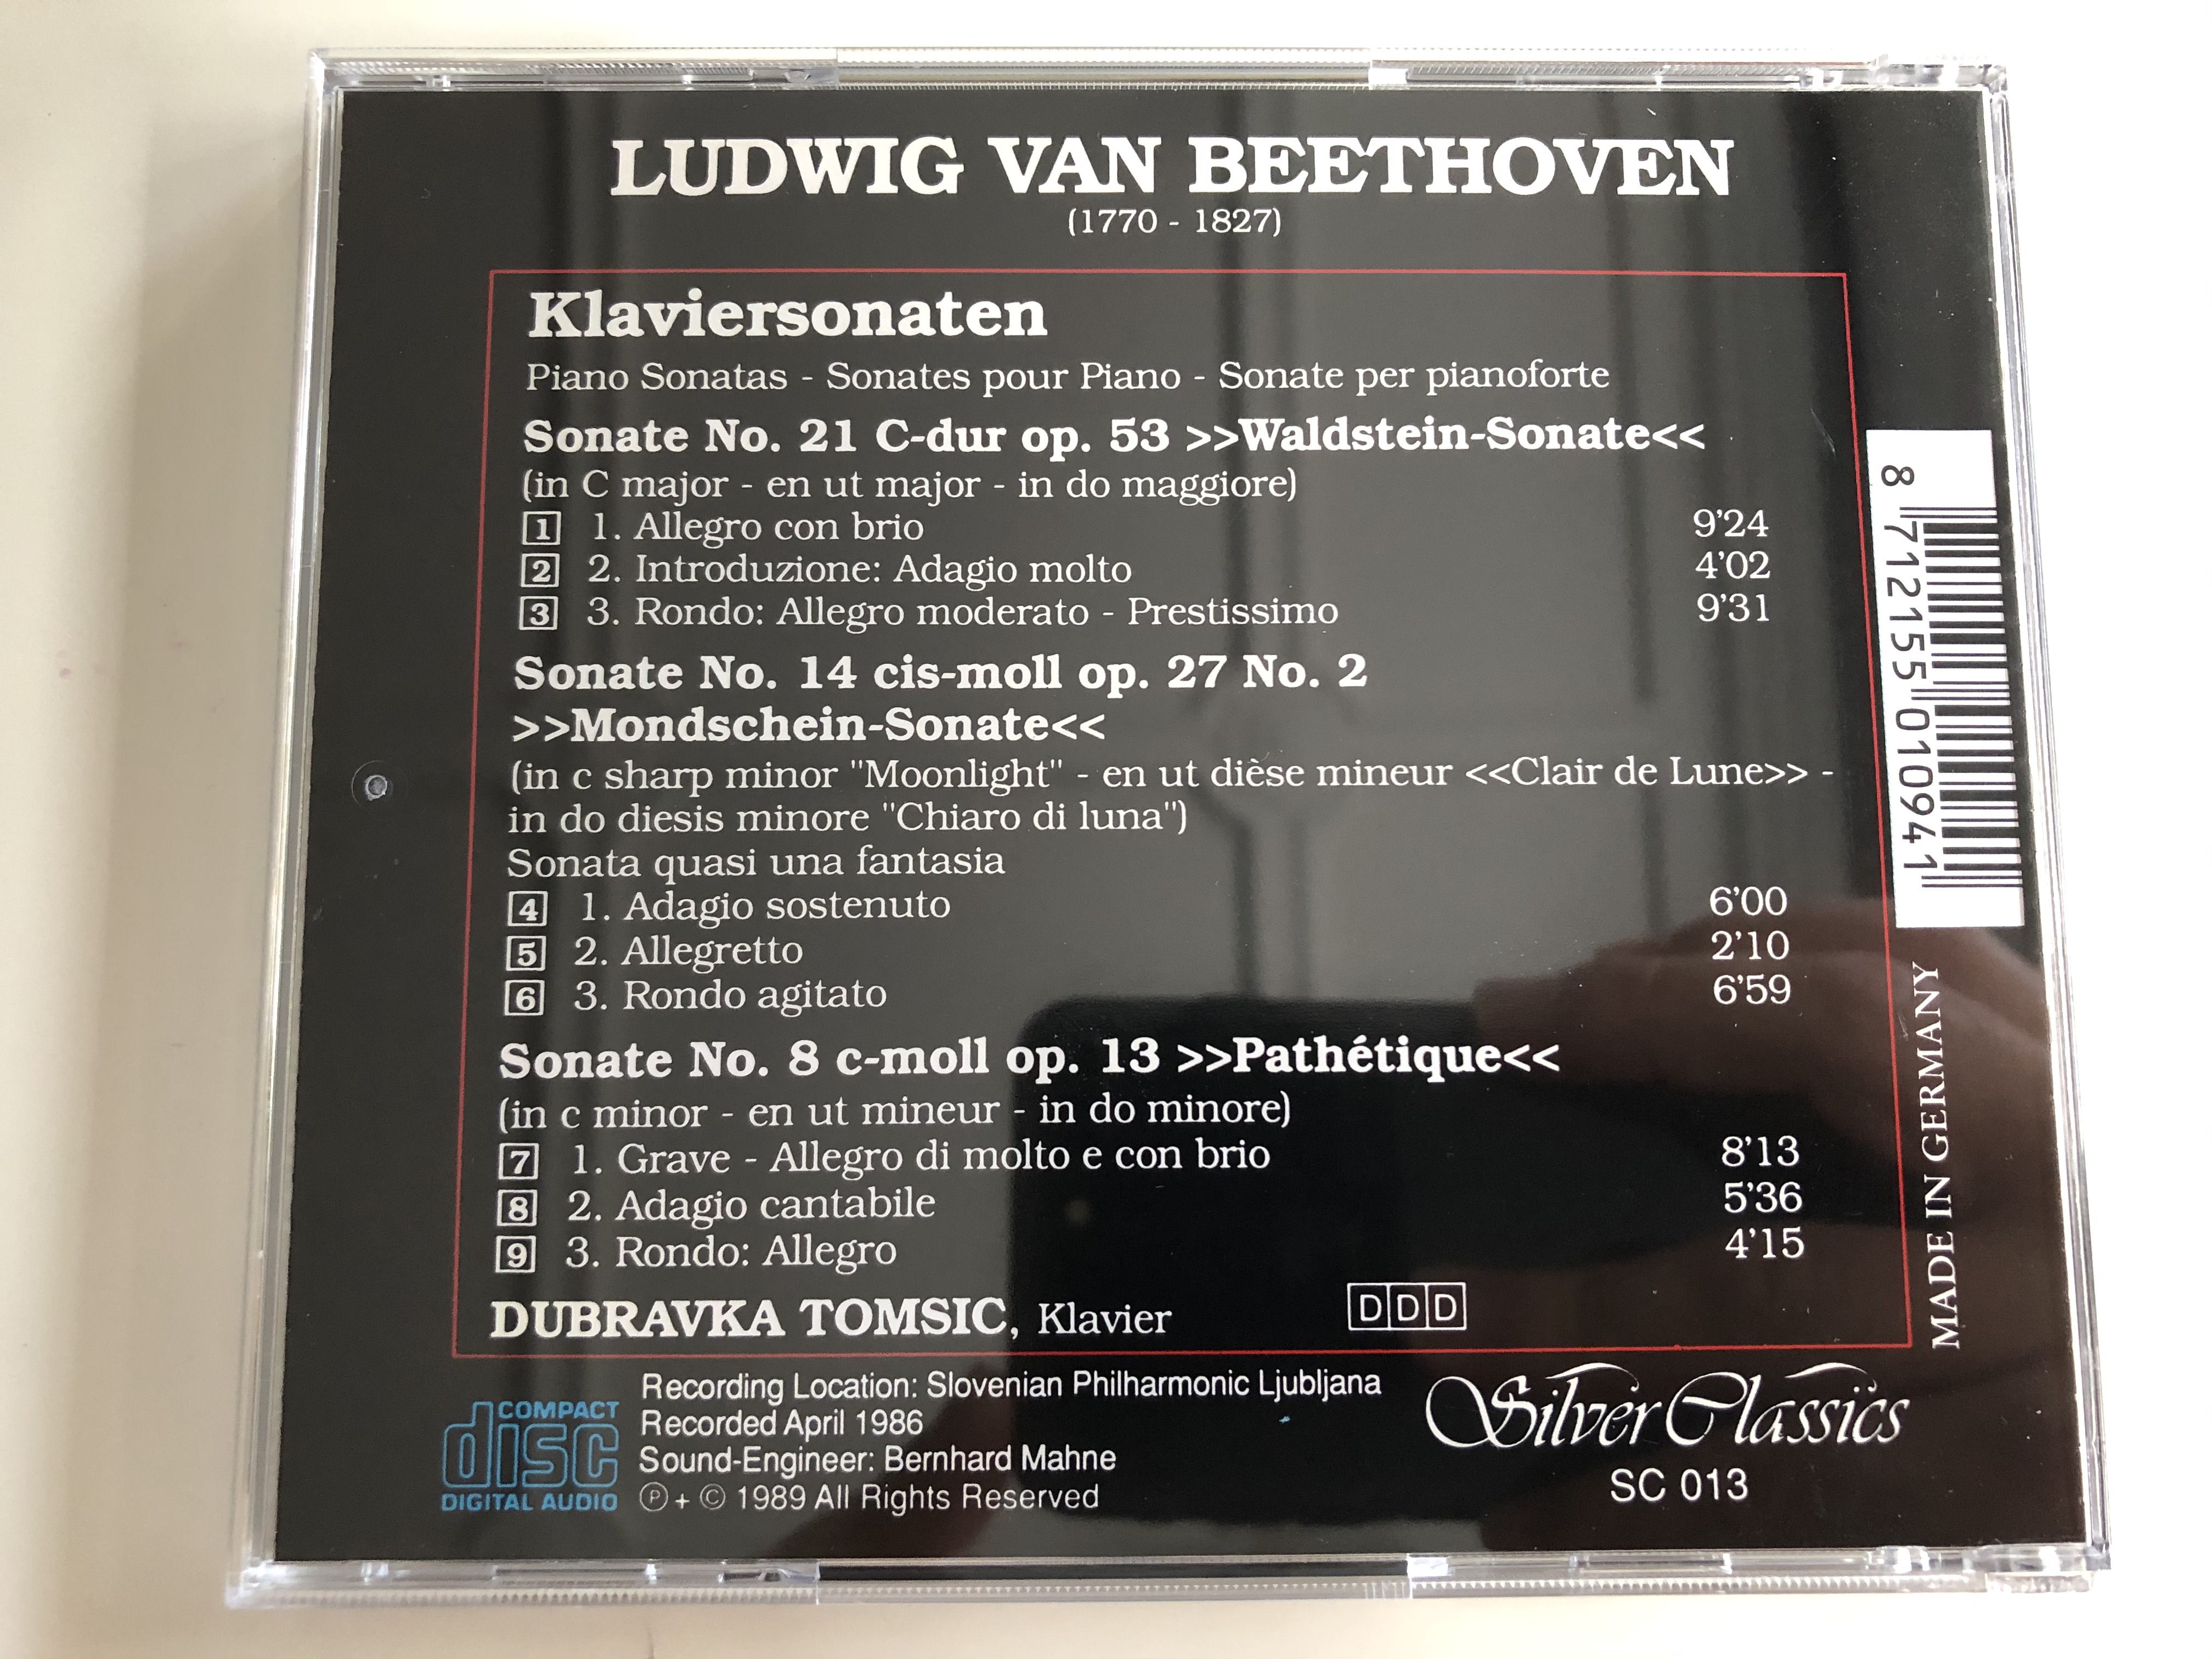 ludwig-van-beethoven-klaviersonaten-klavier-dubravka-tomsic-silver-classics-audio-cd-1989-sc-013-4-.jpg